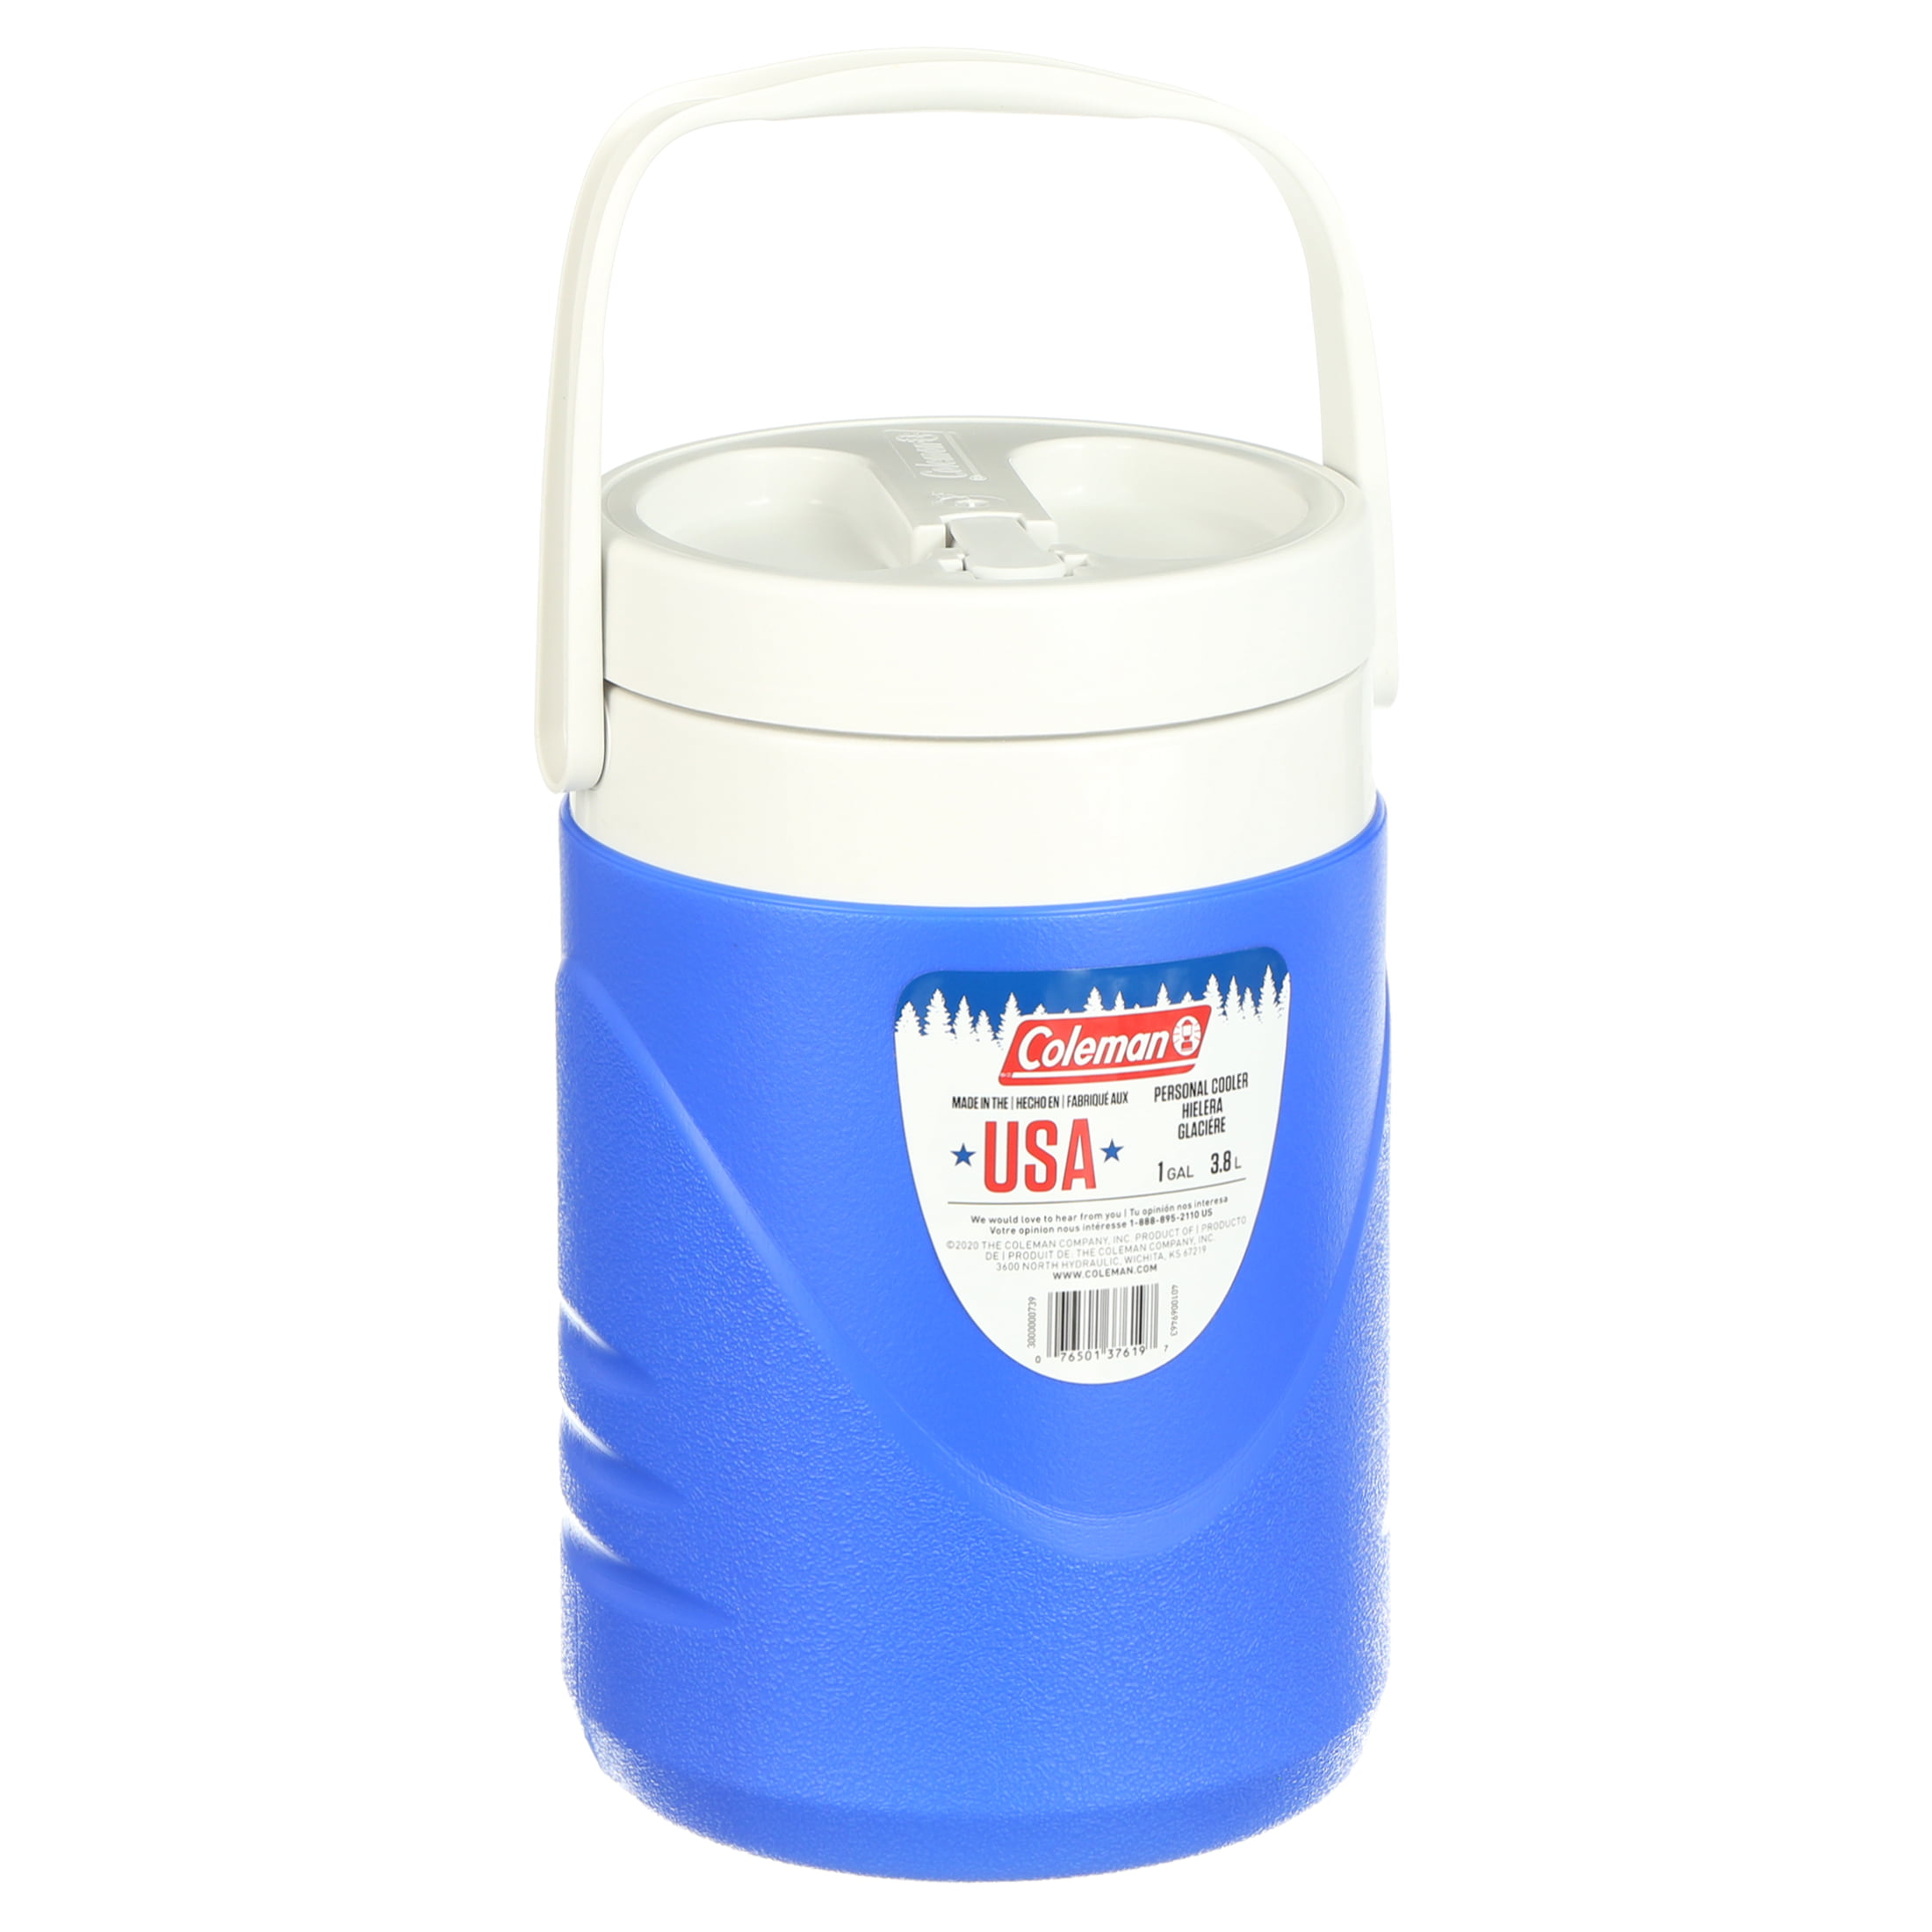 Coleman® 1/3-Gallon Insulated Jug